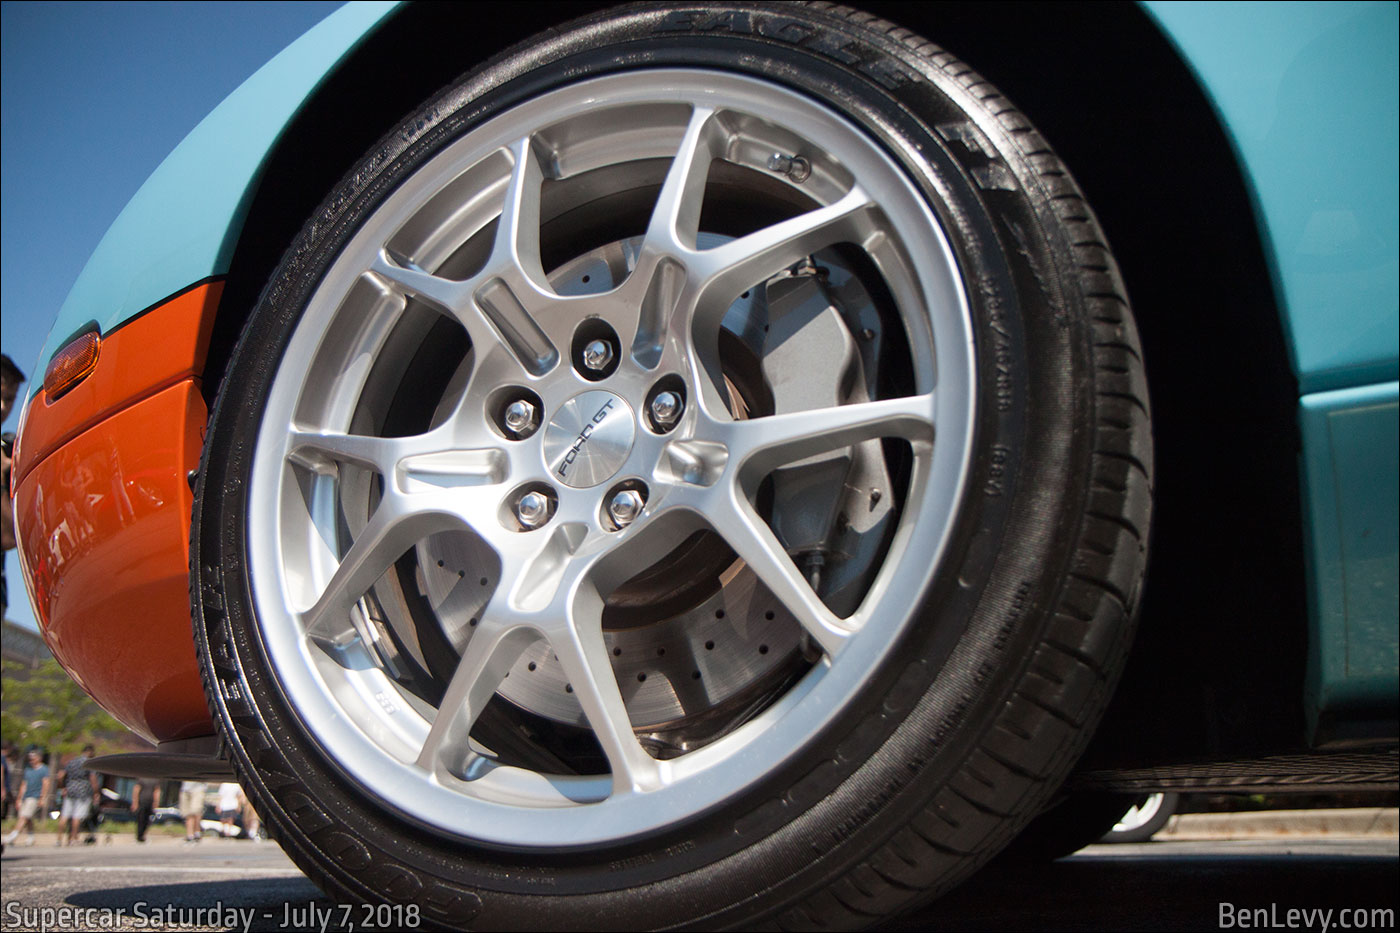 Ford GT wheel